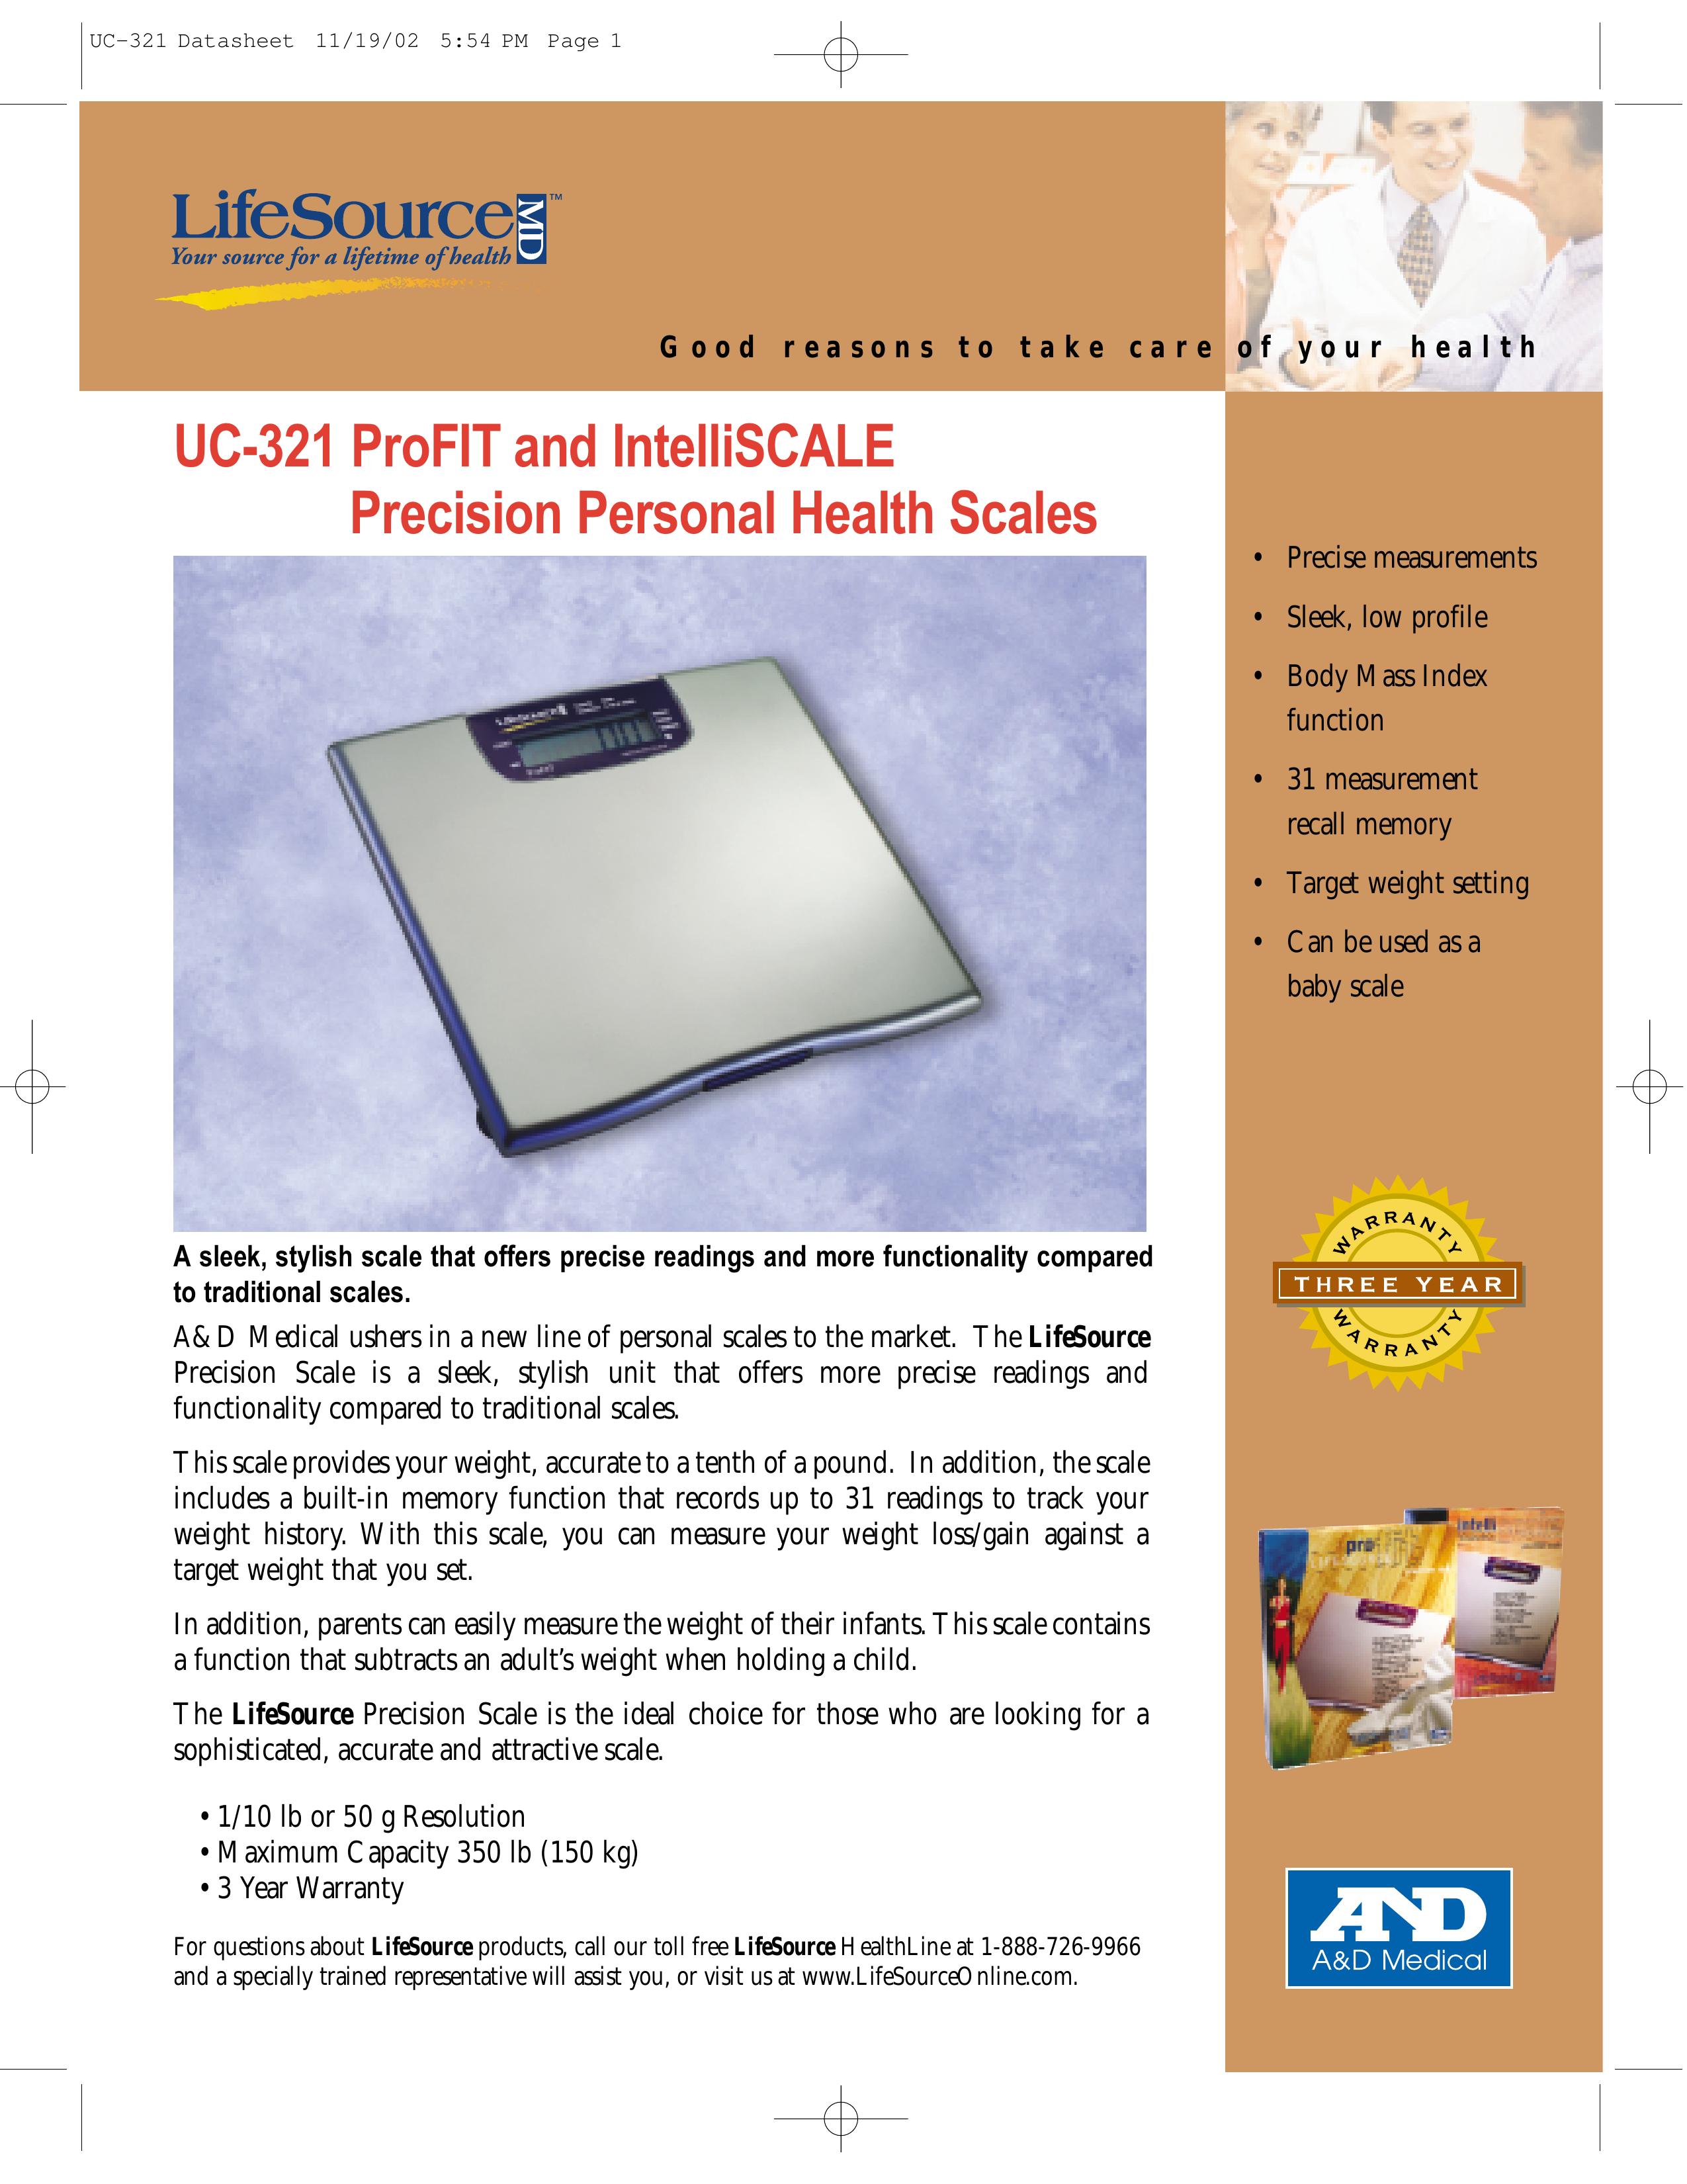 LifeSource UC-321 Scale User Manual